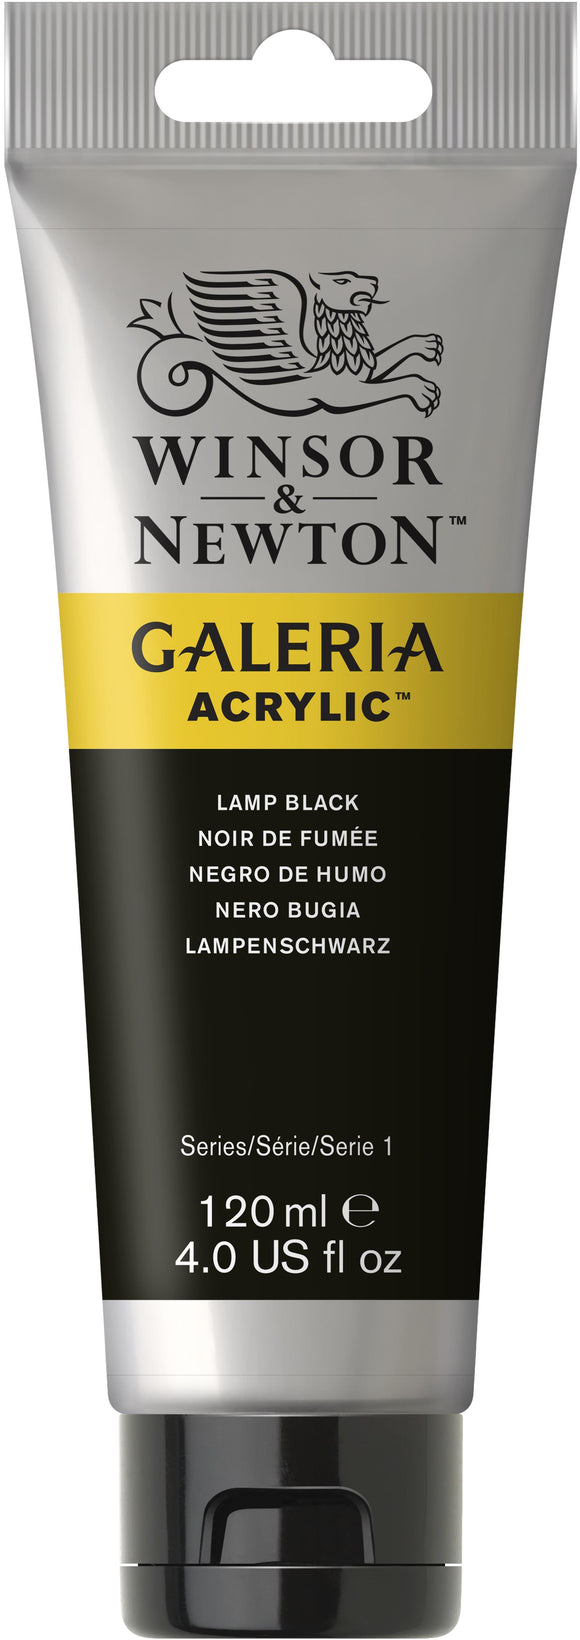 Winsor & Newton Galeria Acrylic Lamp Black 120Ml